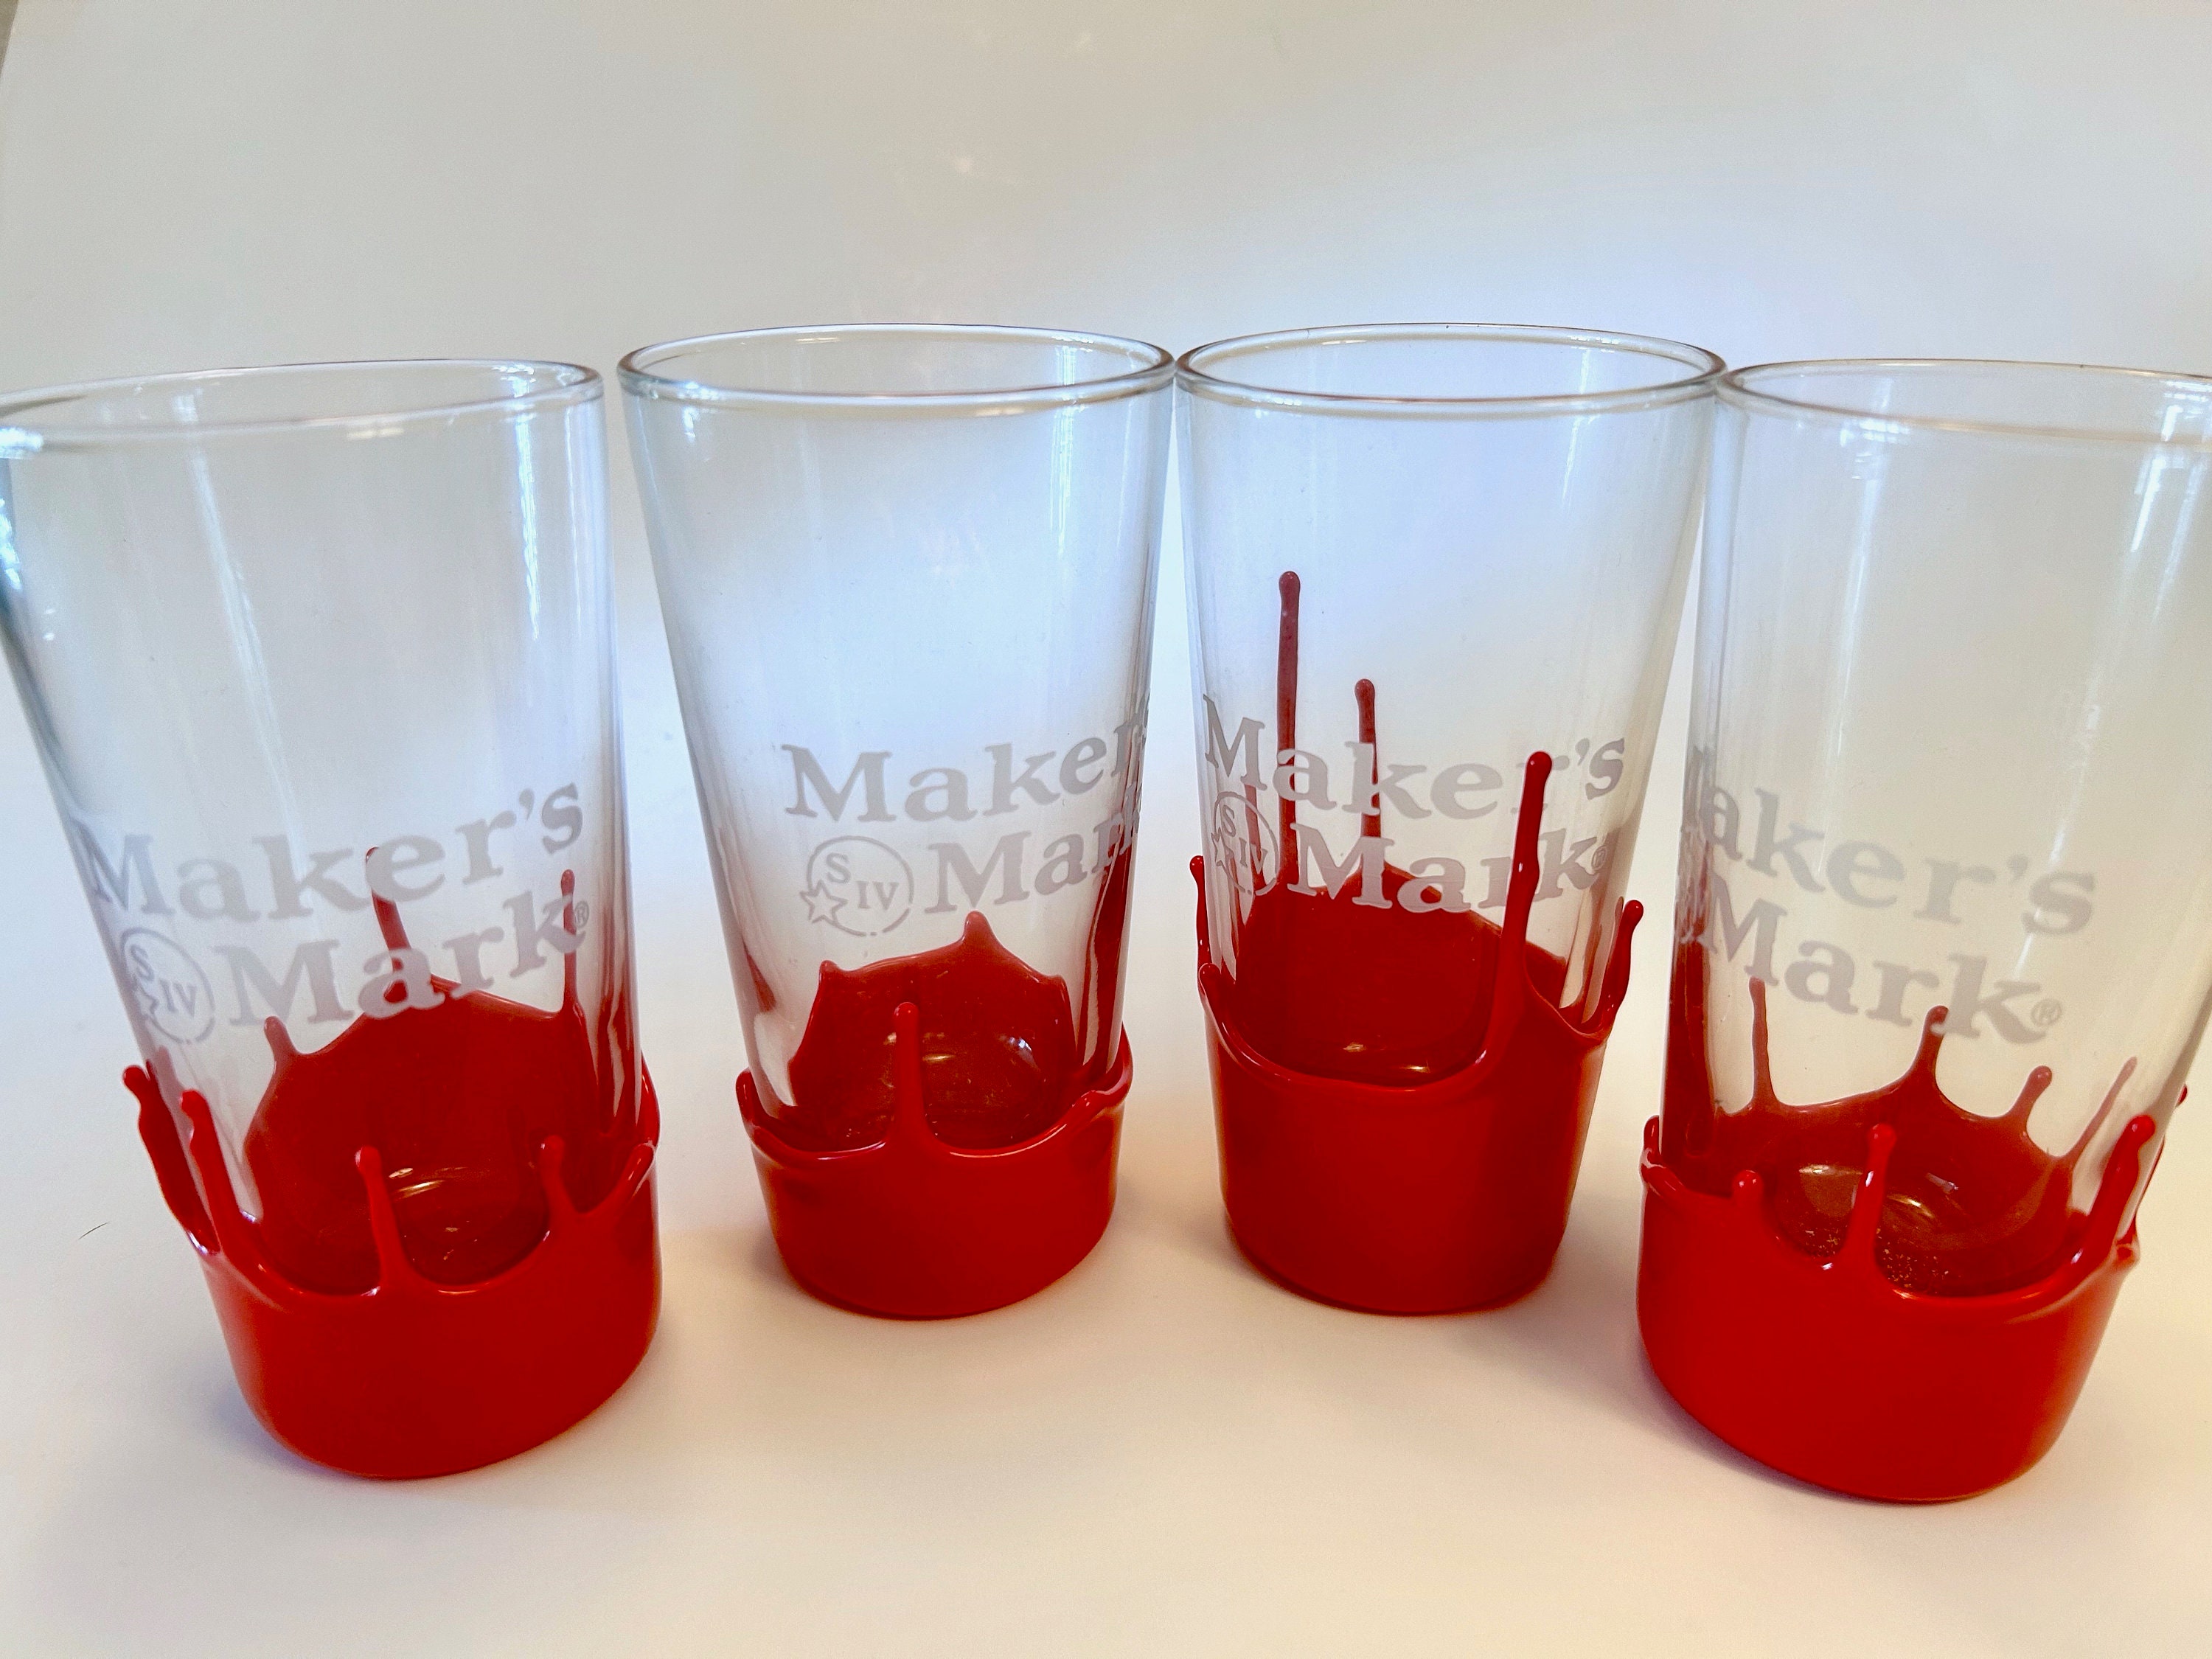 Send a Set of Maker's Mark Dipped Glasses Online!